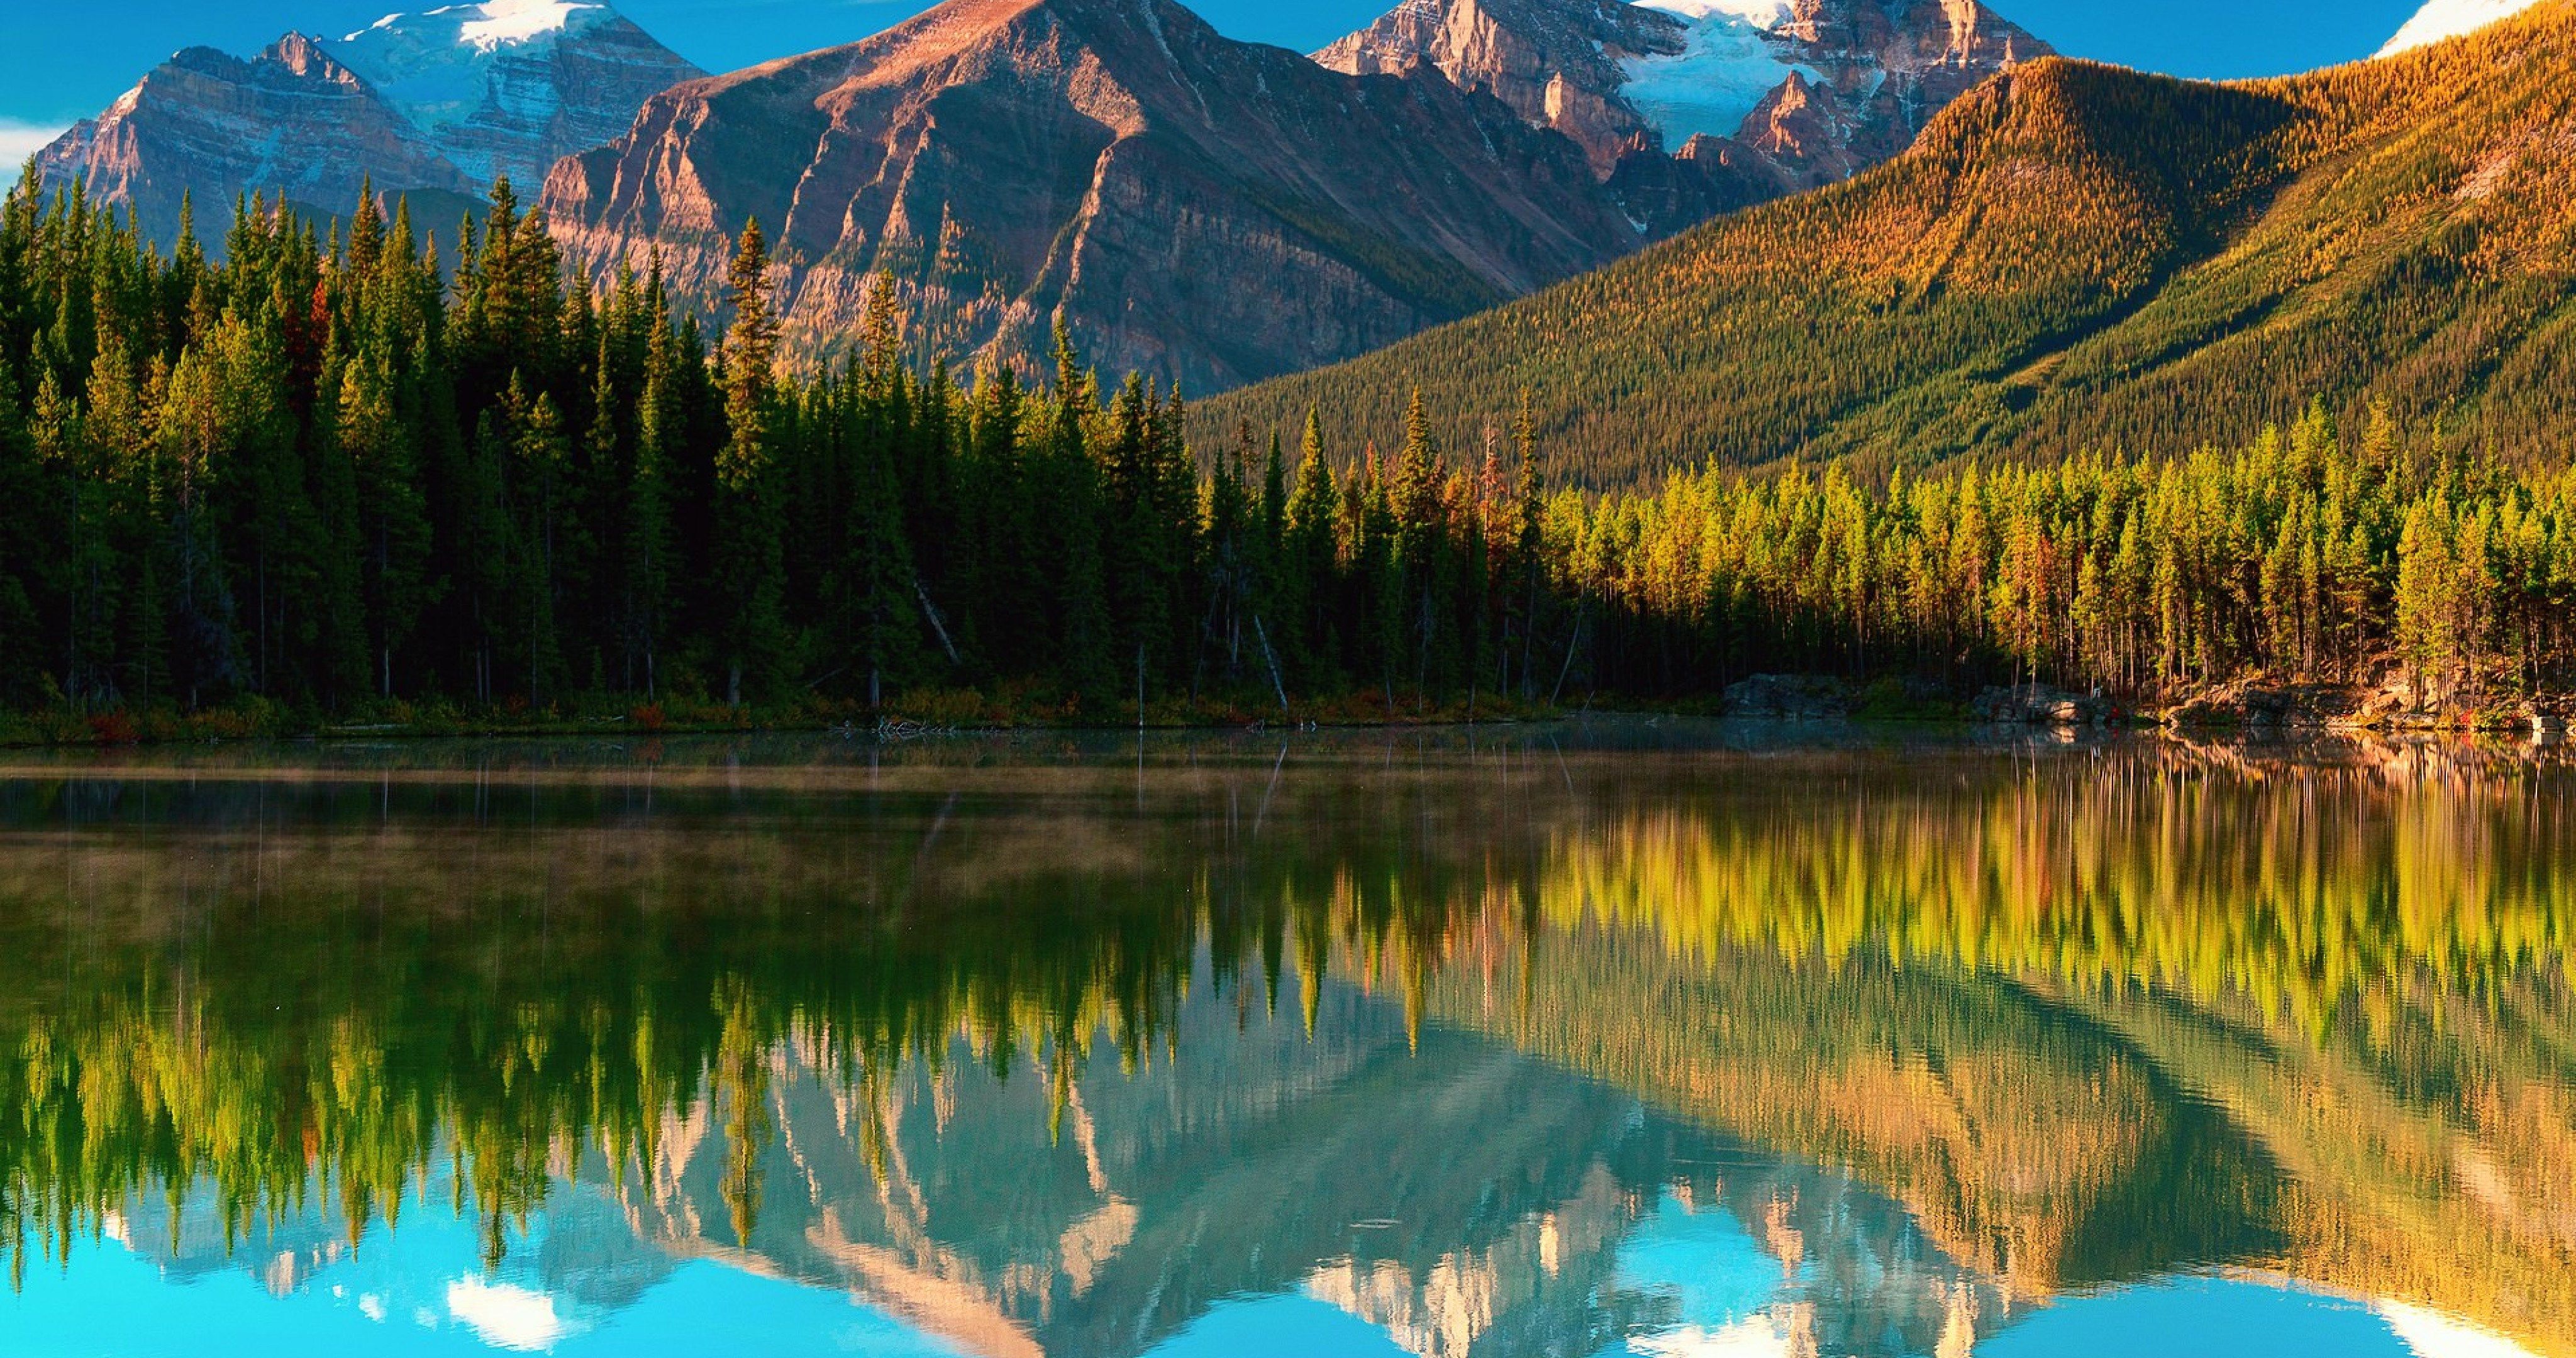 canada lake herbert 4k ultra HD wallpaper. Canada wallpaper HD